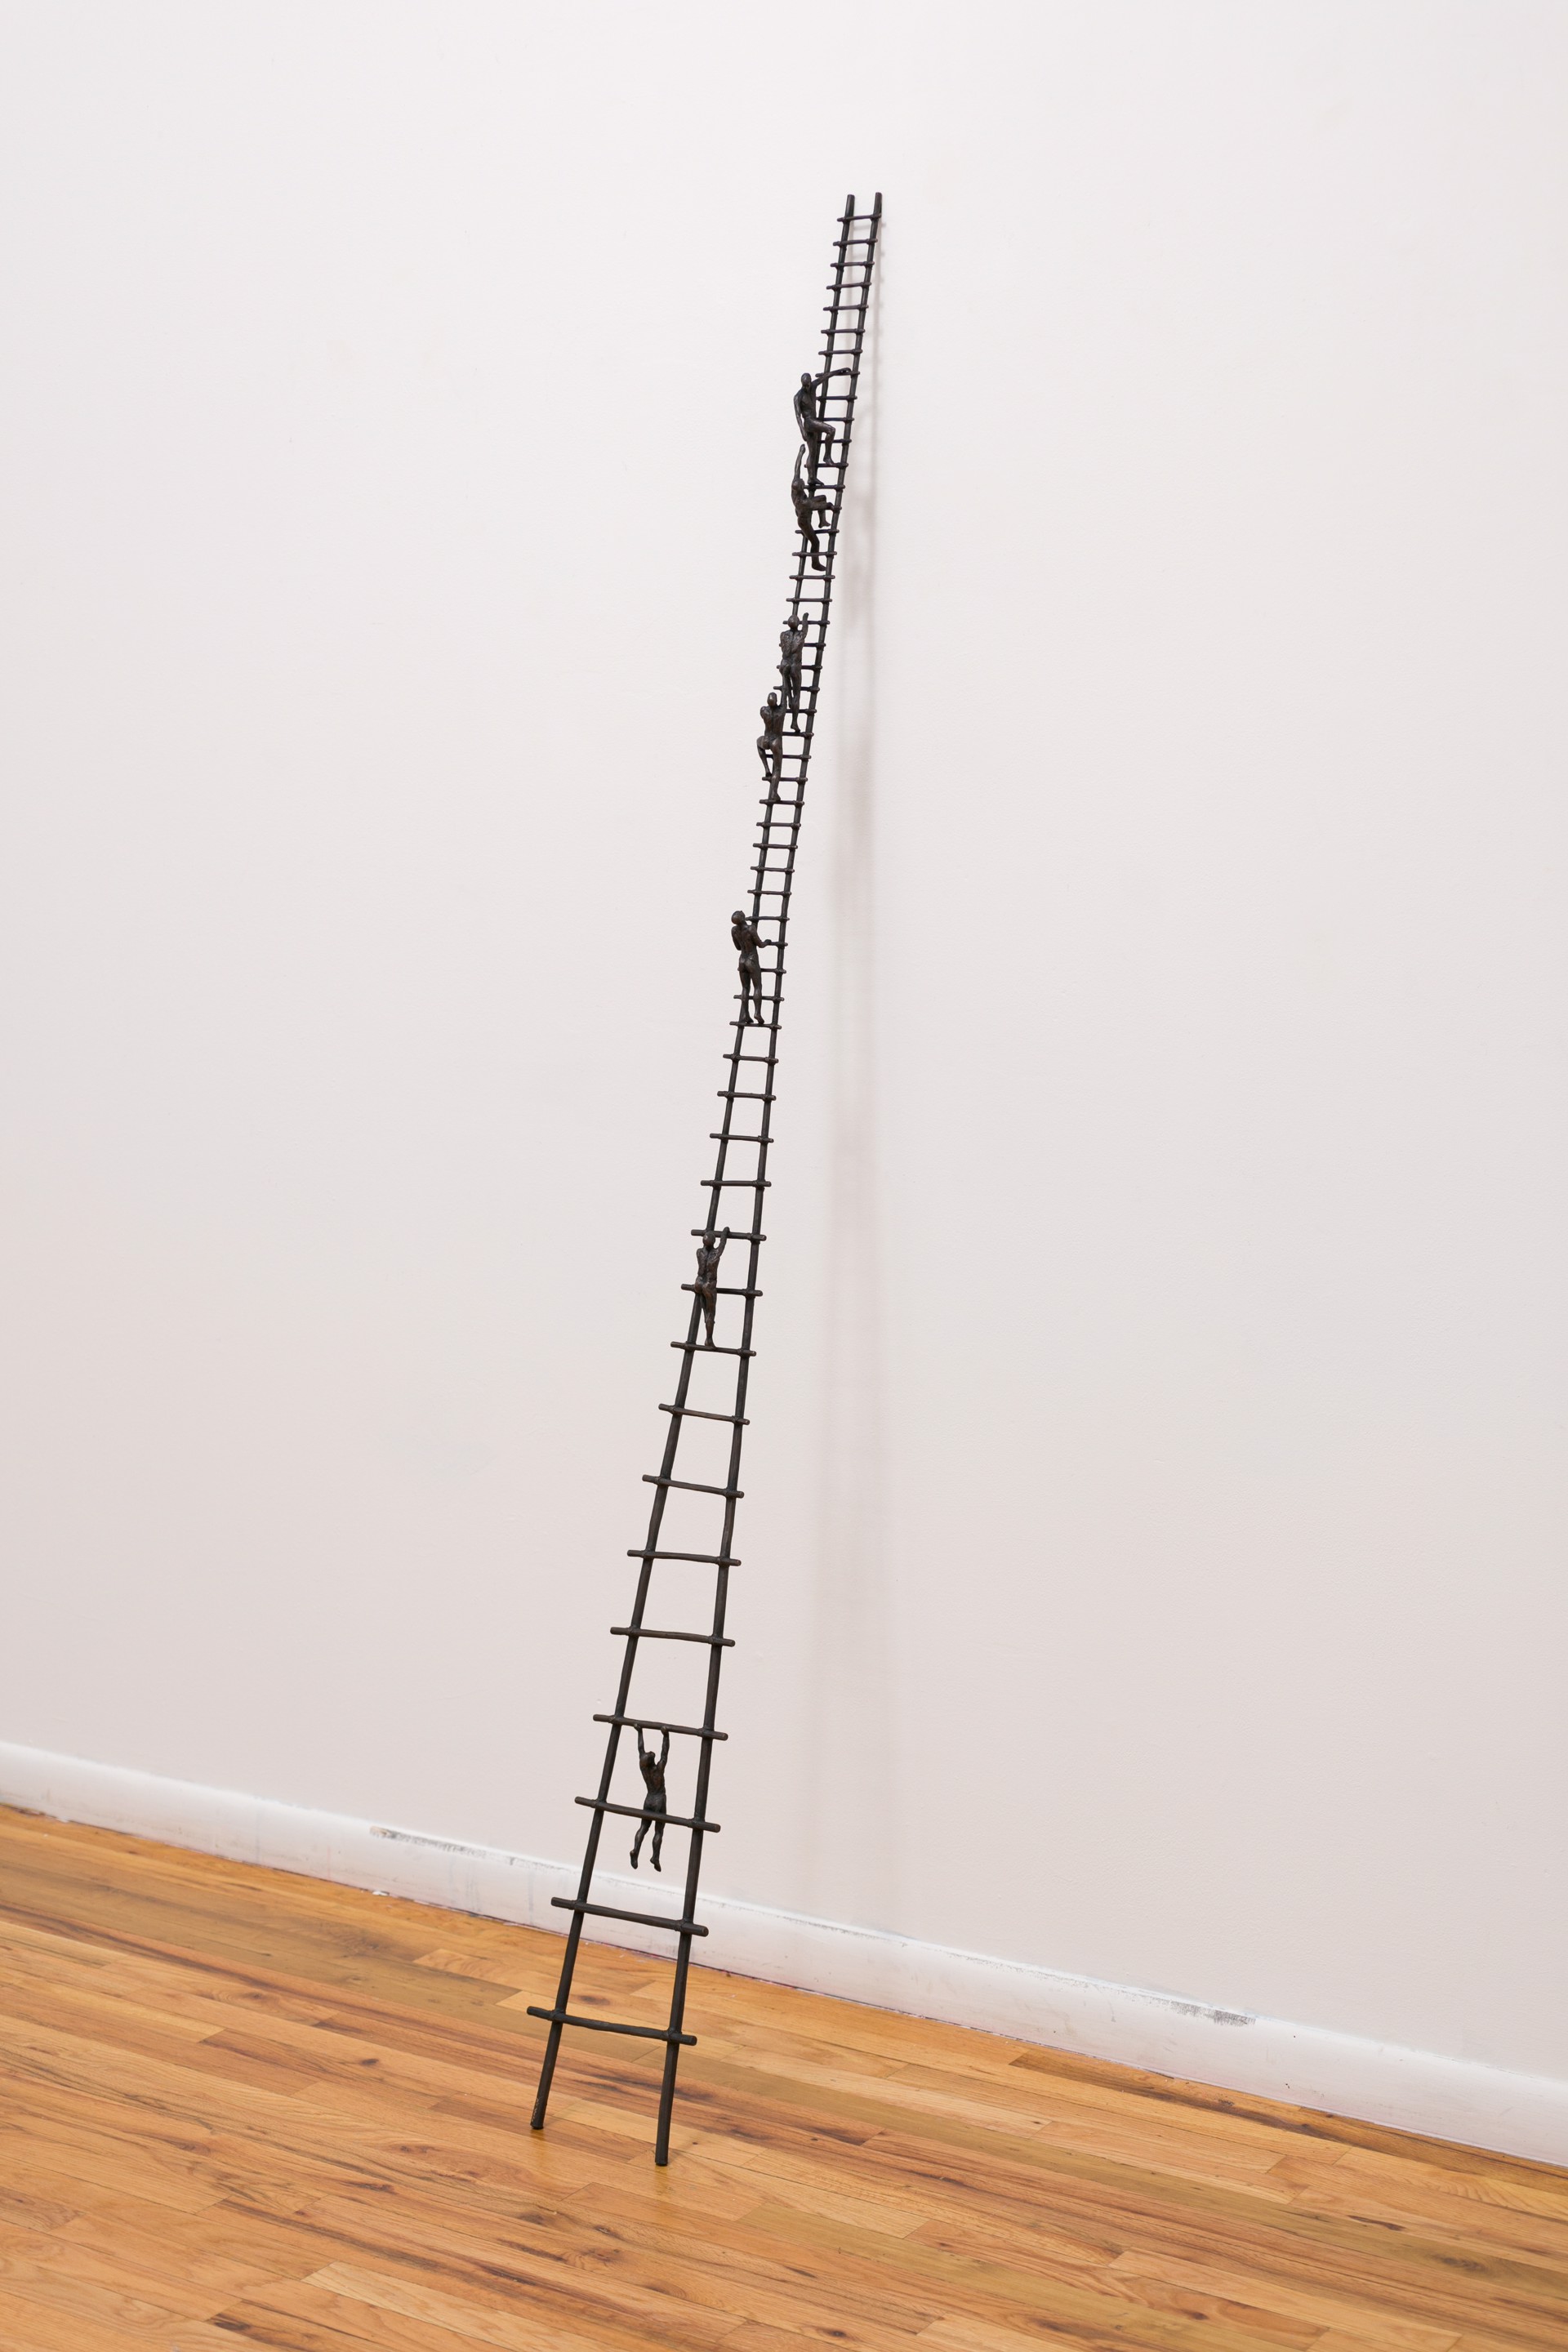 Climbers: The Ladder II by Bill Starke